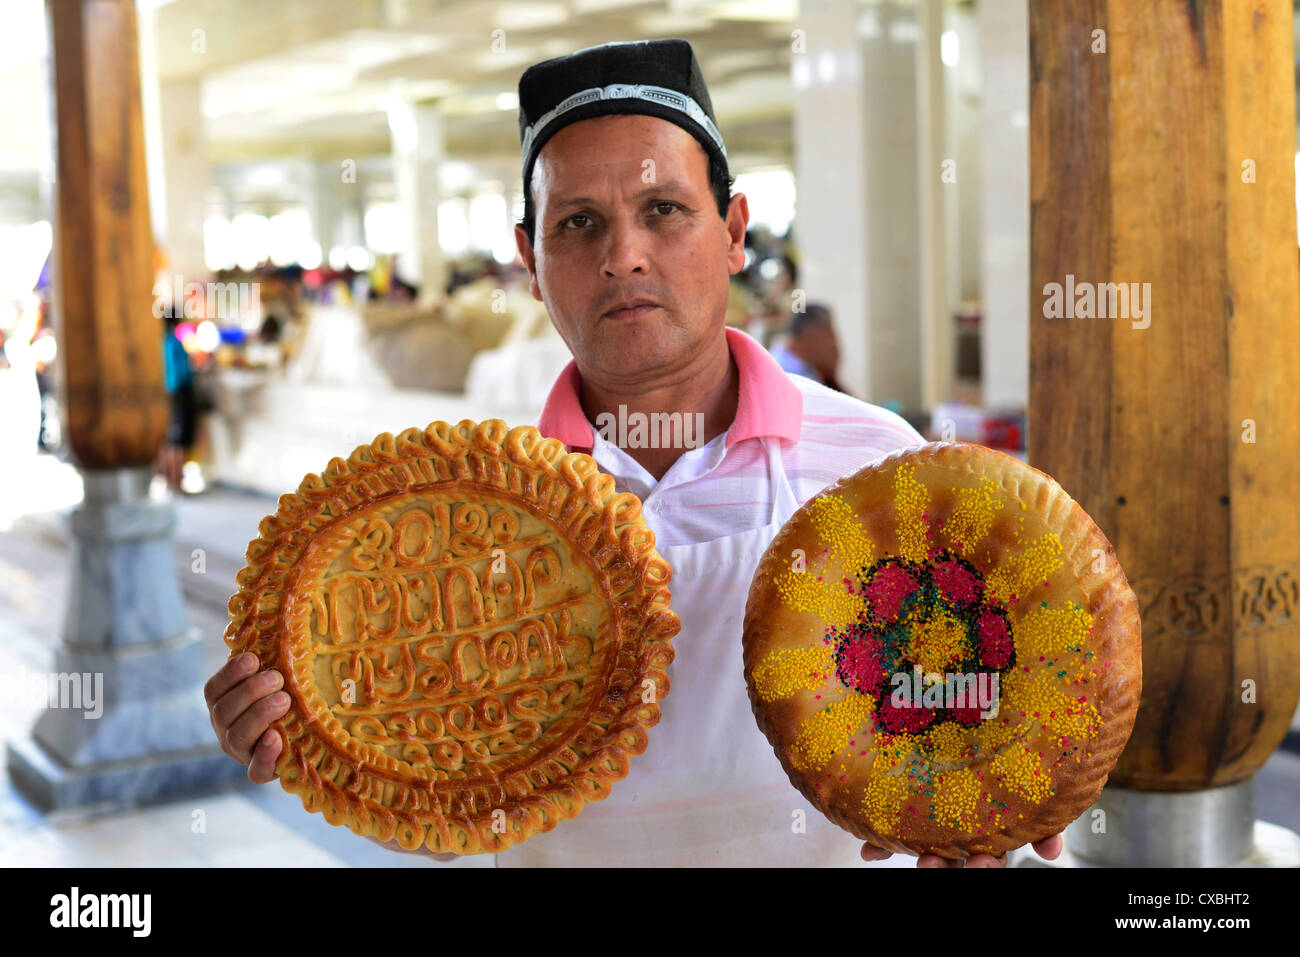 Obi Non- a traditional Uzbek / Tajik bread sold in Siob bazzar in Samarkand. Stock Photo